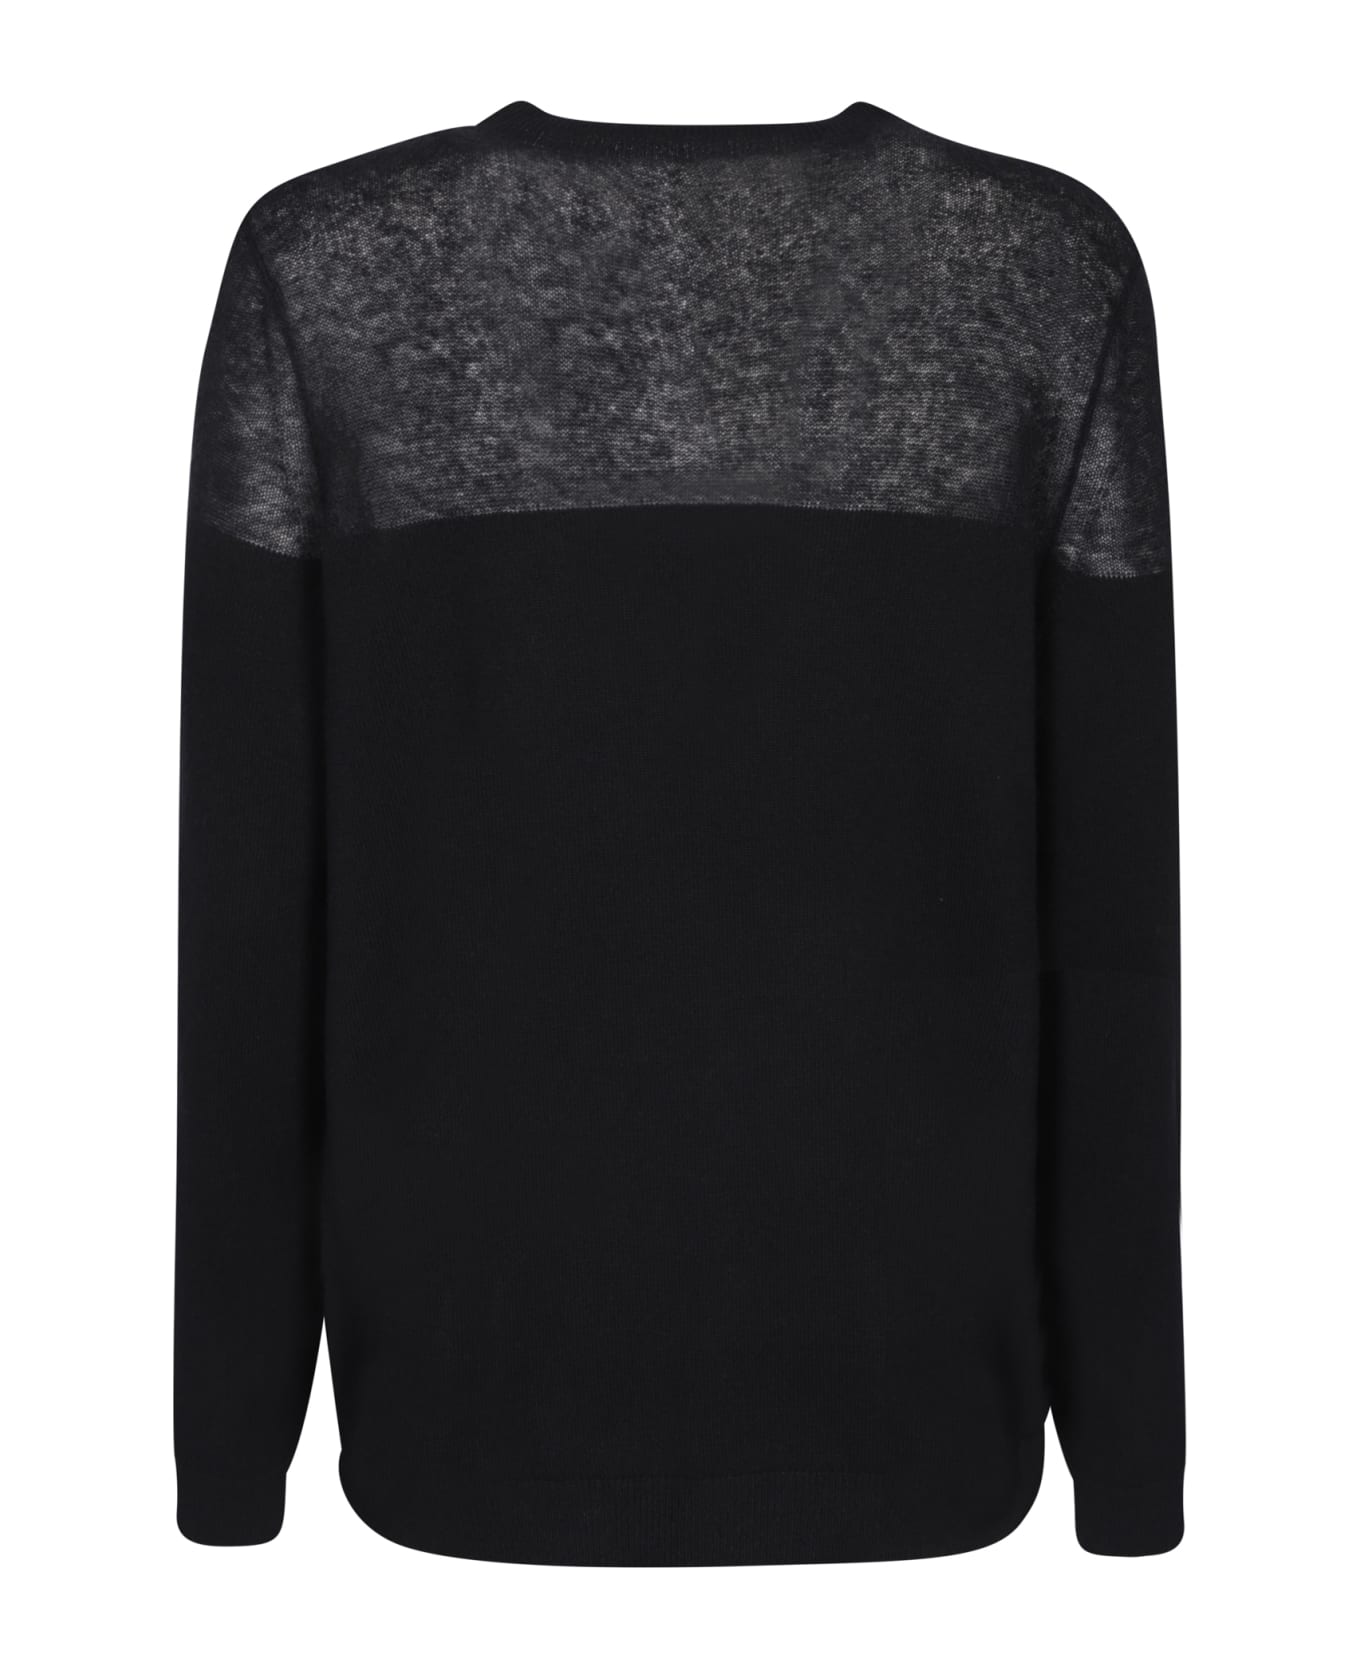 Fabiana Filippi Premium Yarn Black Sweater - Black